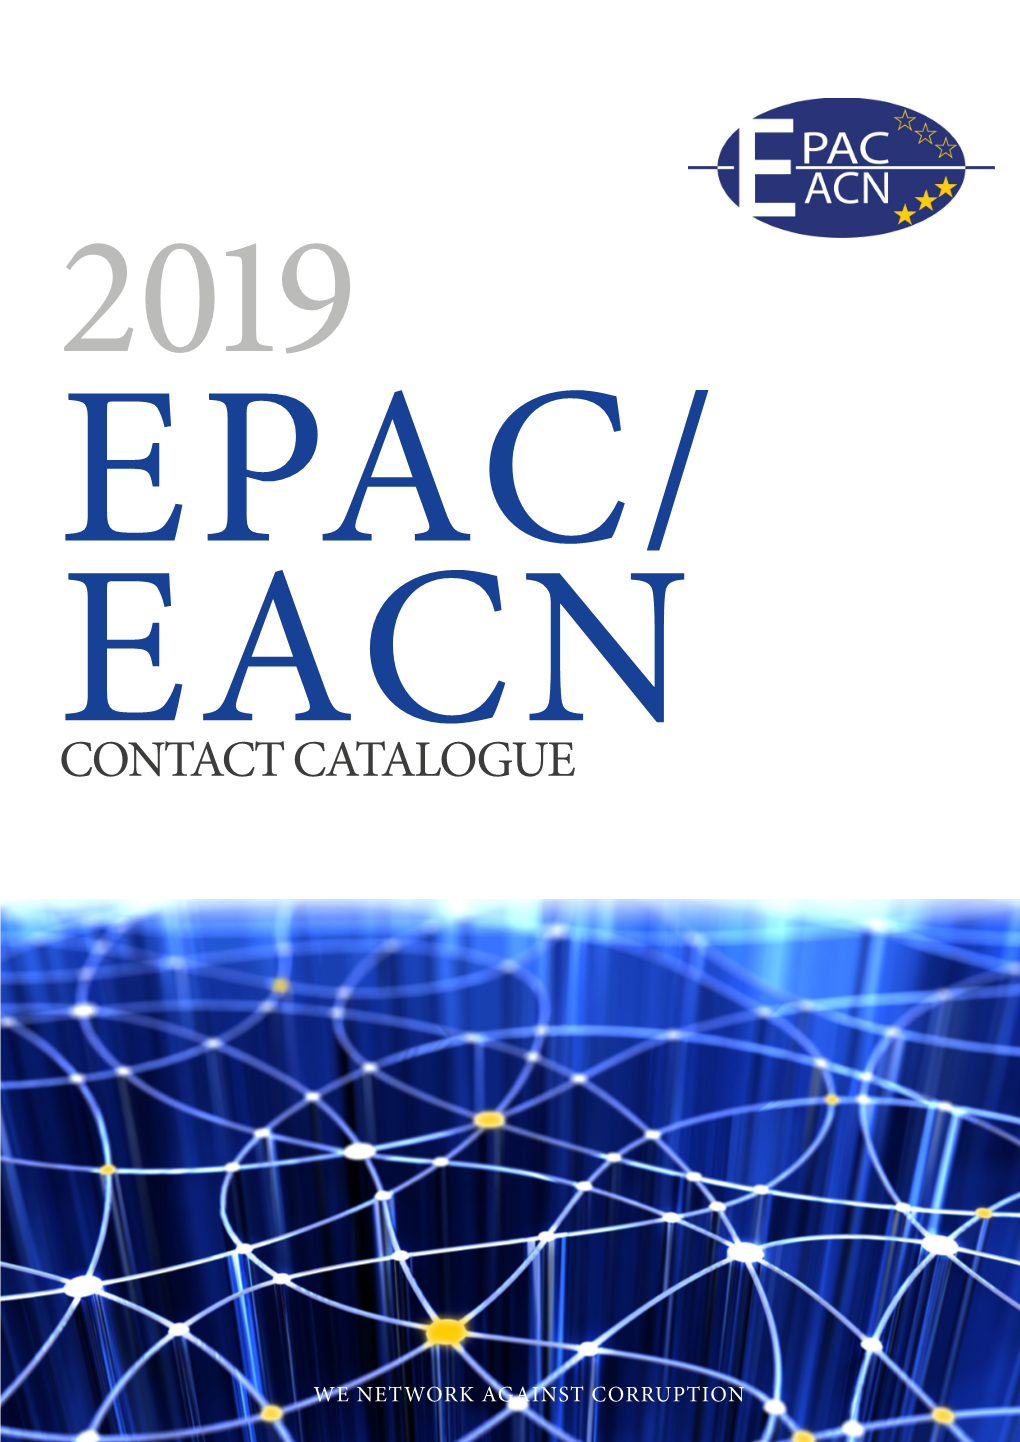 Contact Catalogue 2019